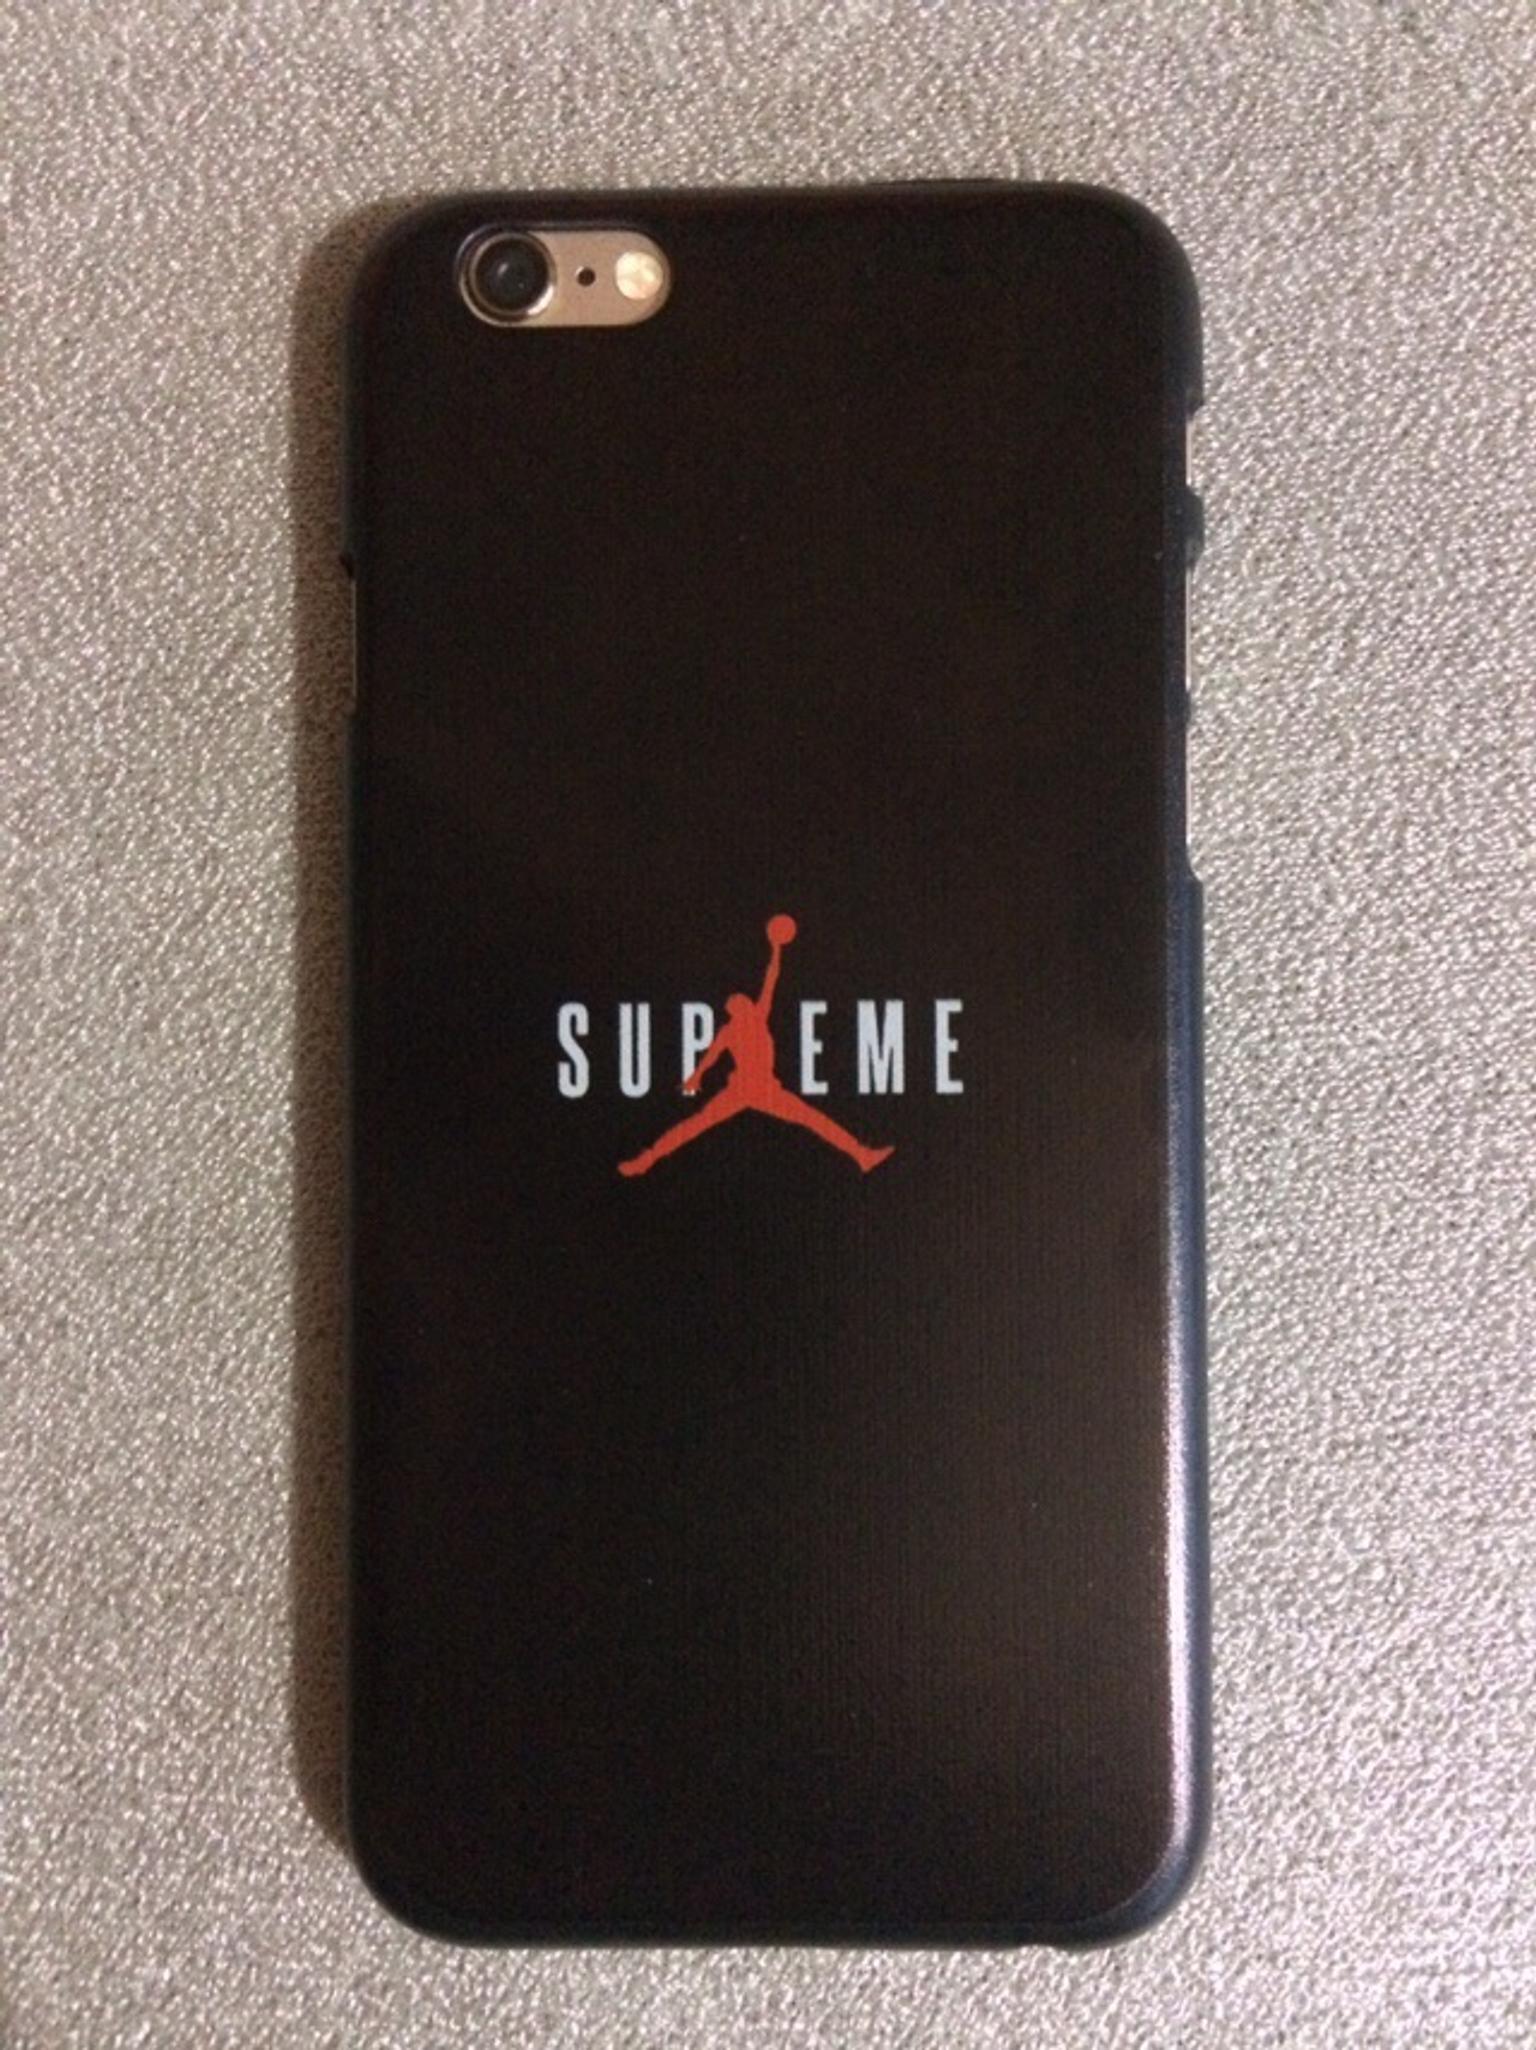 Cover iPhone supreme Michael Jordan 6 6s 7 in 41049 Sassuolo for ...